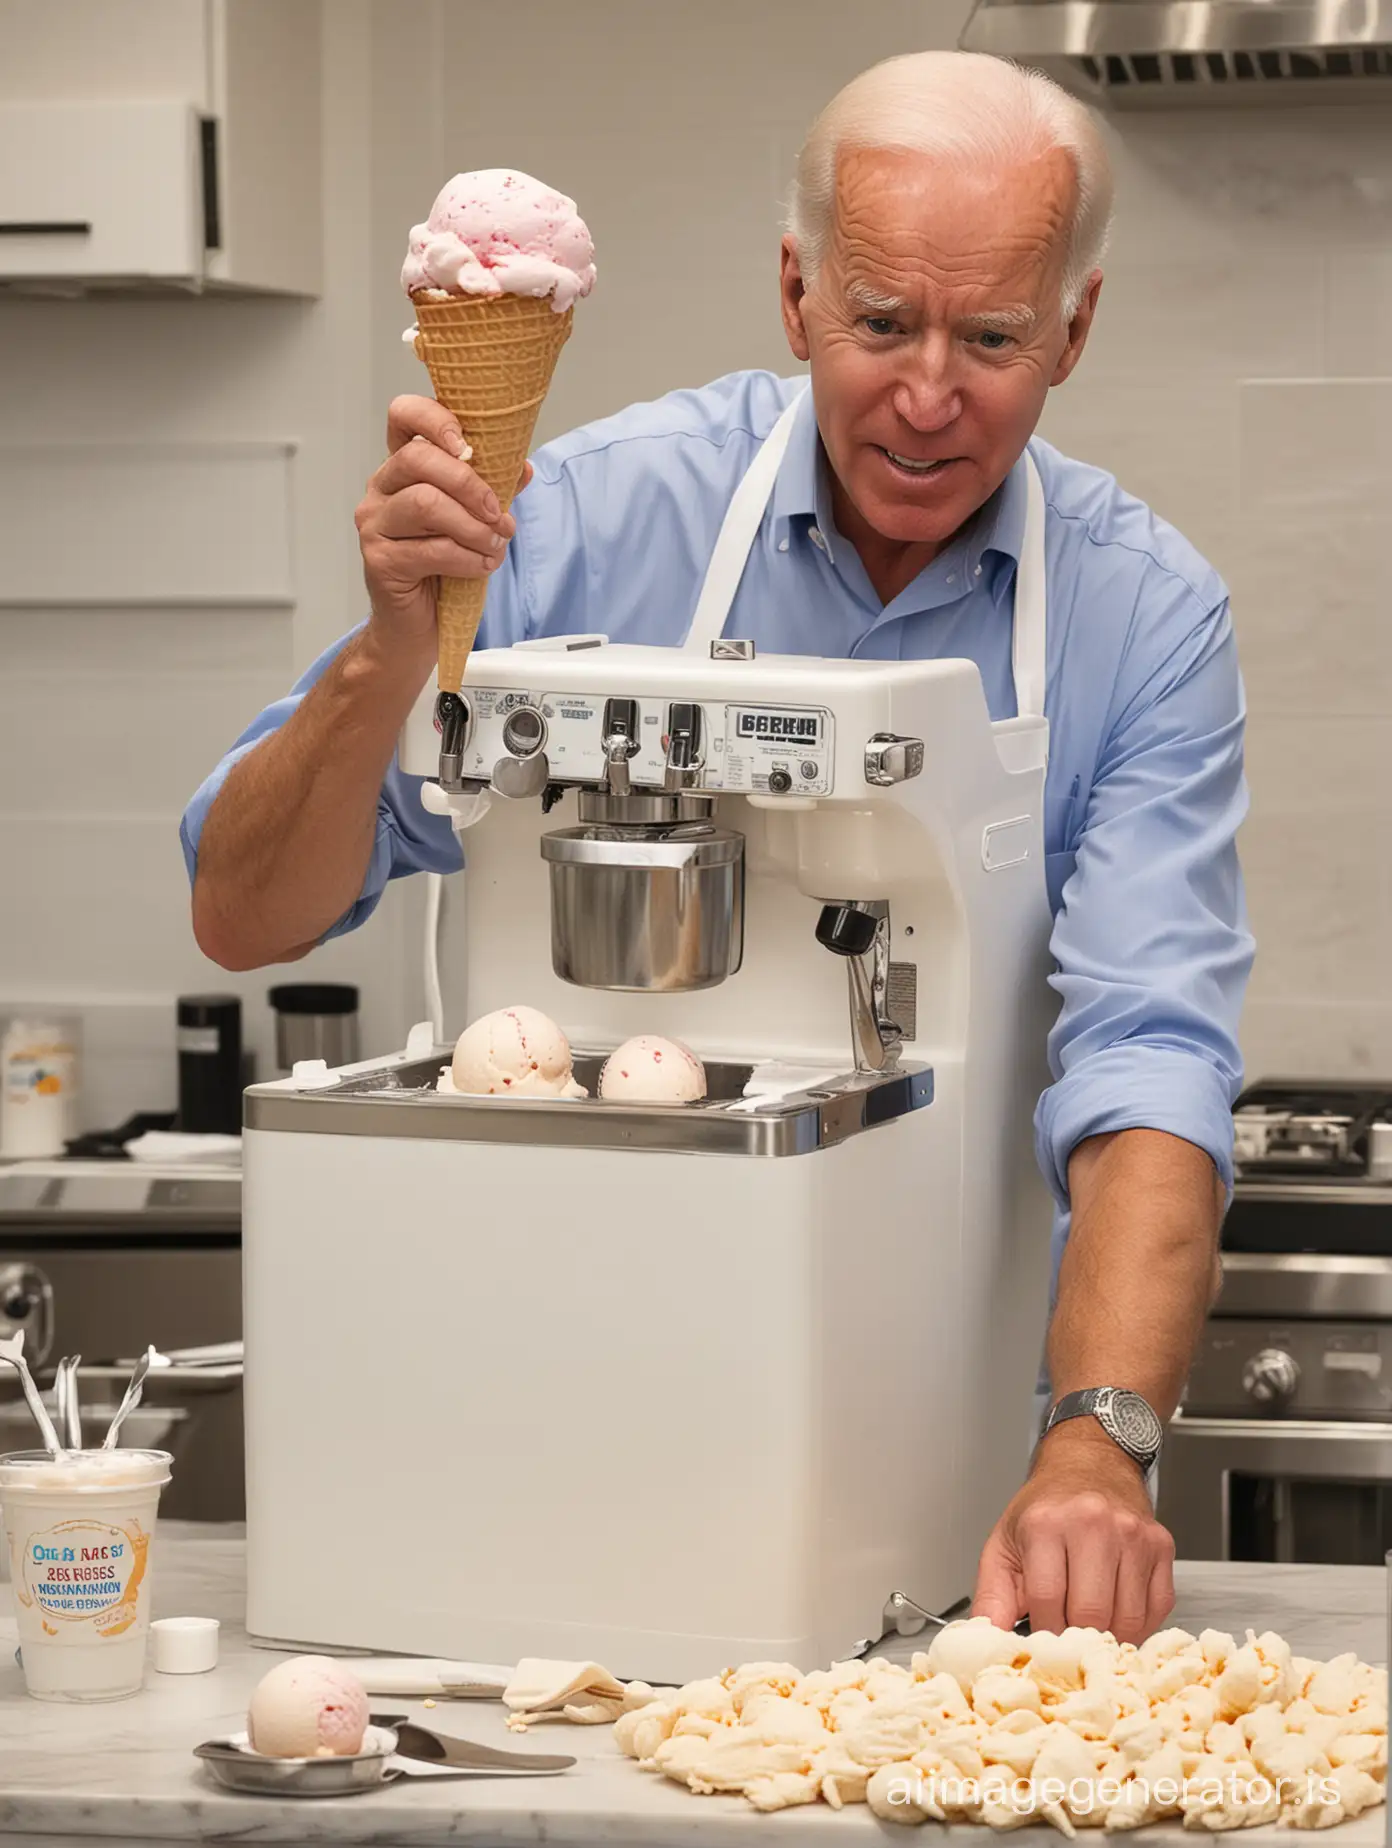 Joe Biden with apron making ice cream with a ice cream machine